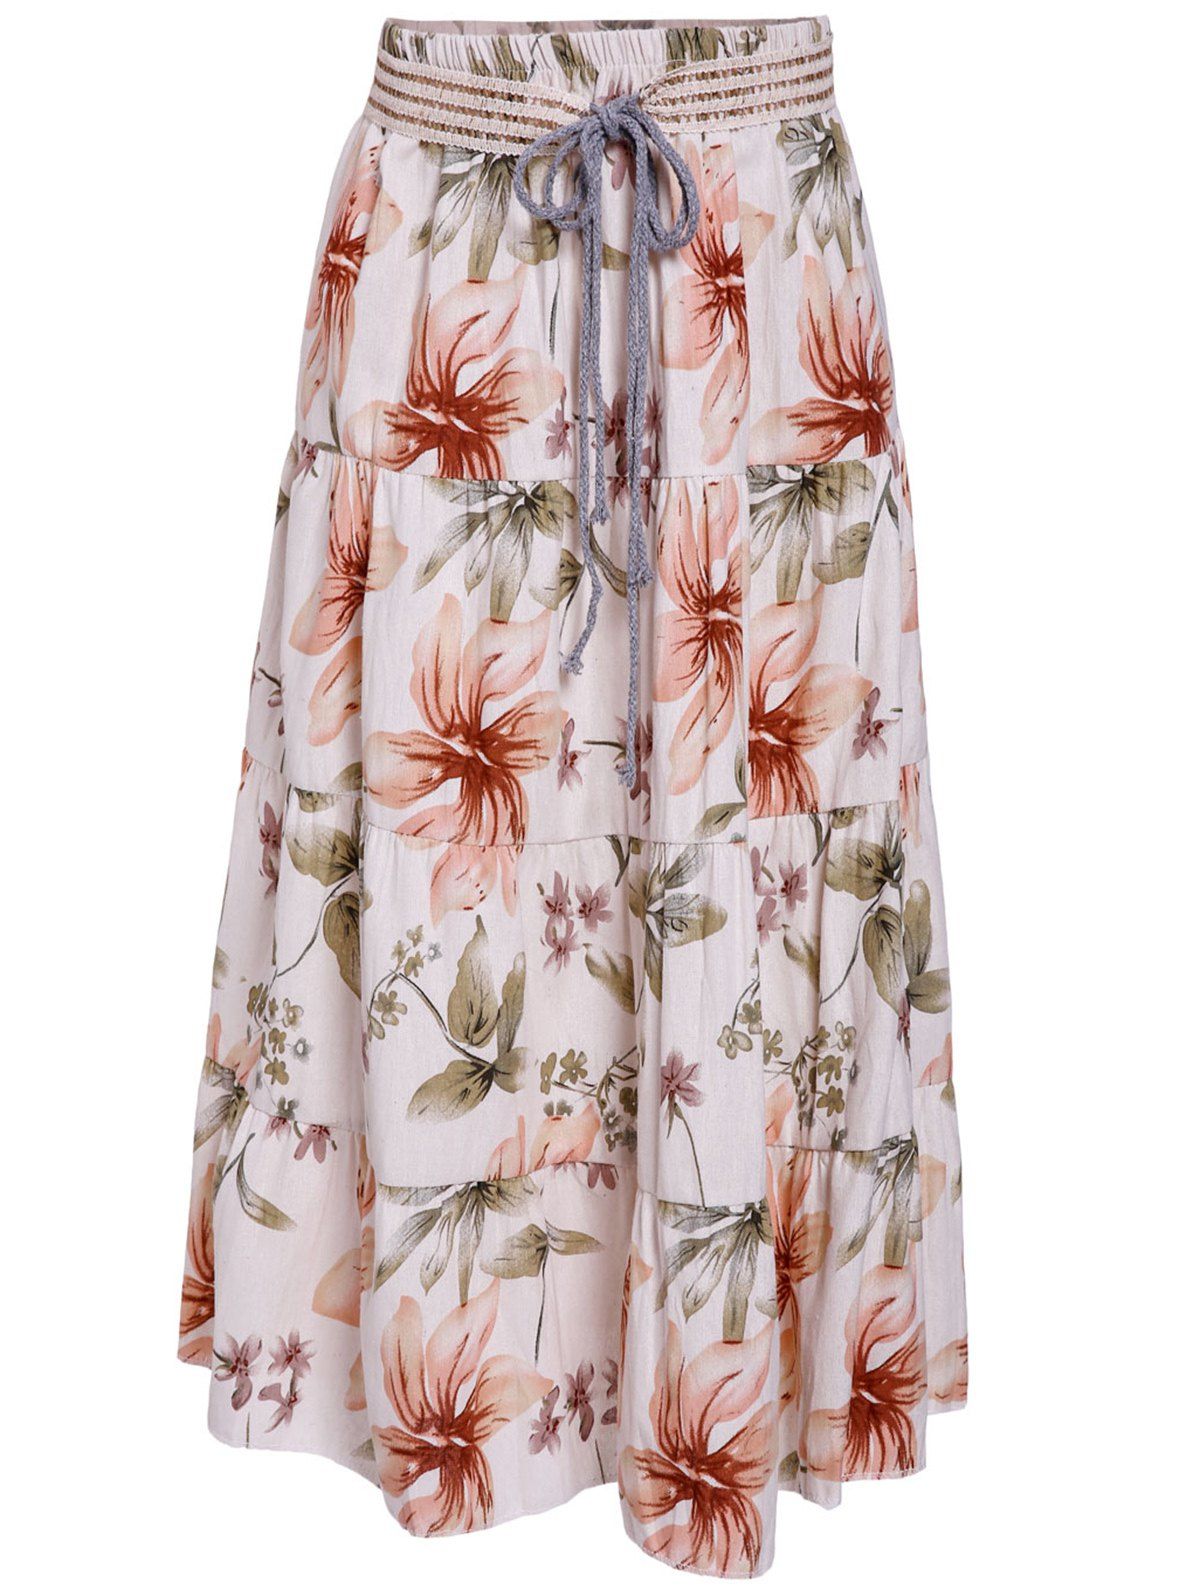 [66% OFF] Bohemian Printed Mid-Calf A-Line Midi Skirt For Women | Rosegal